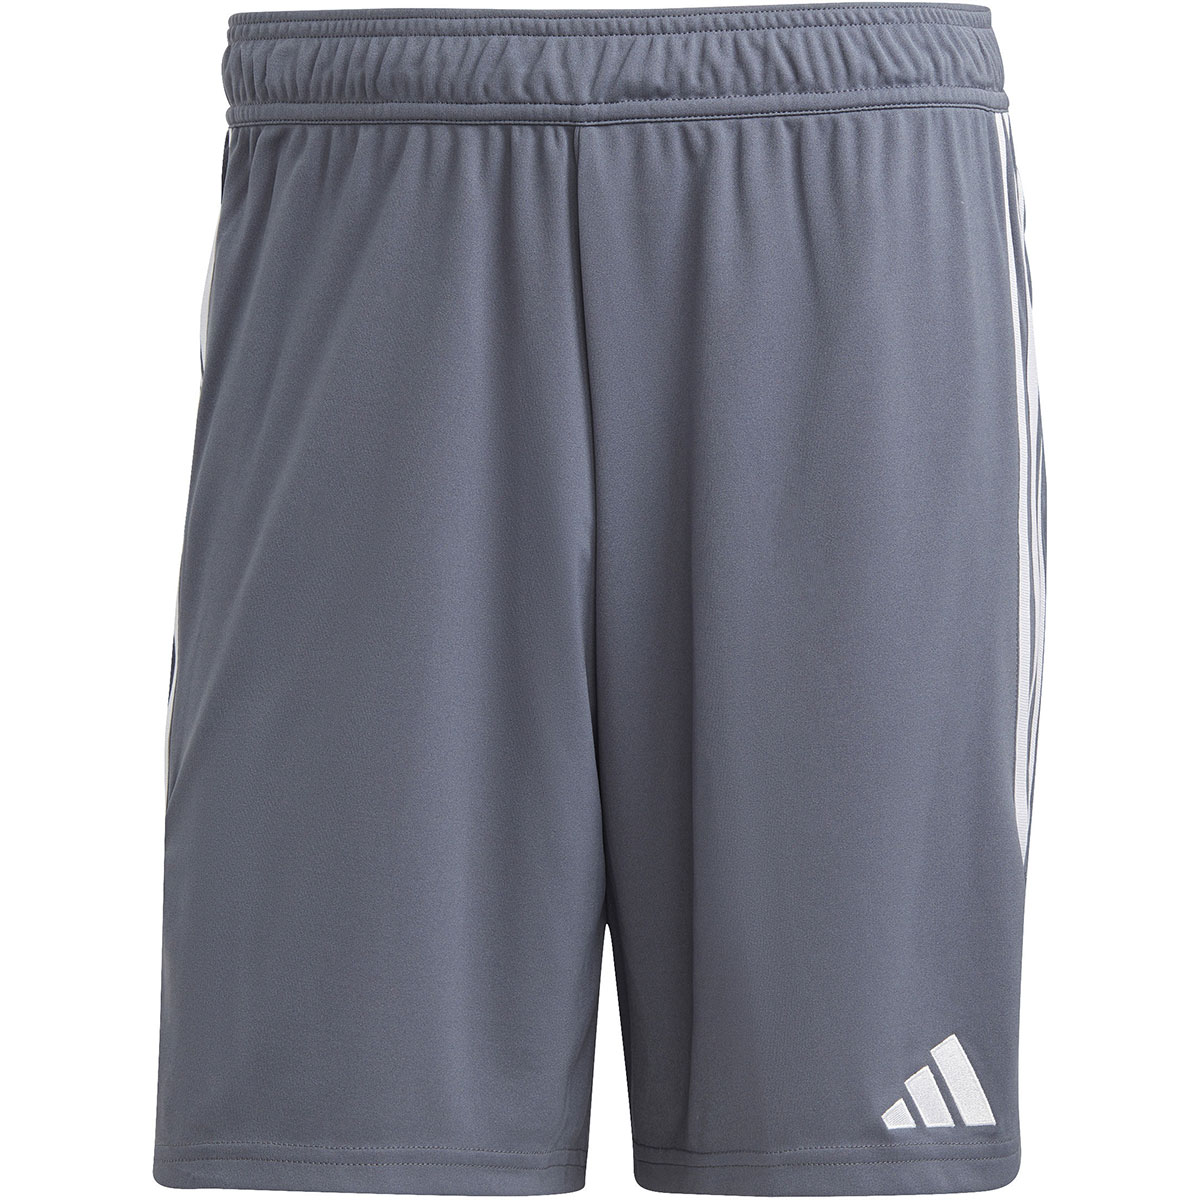 Adidas Herren Shorts Tiro 23 grau-weiß